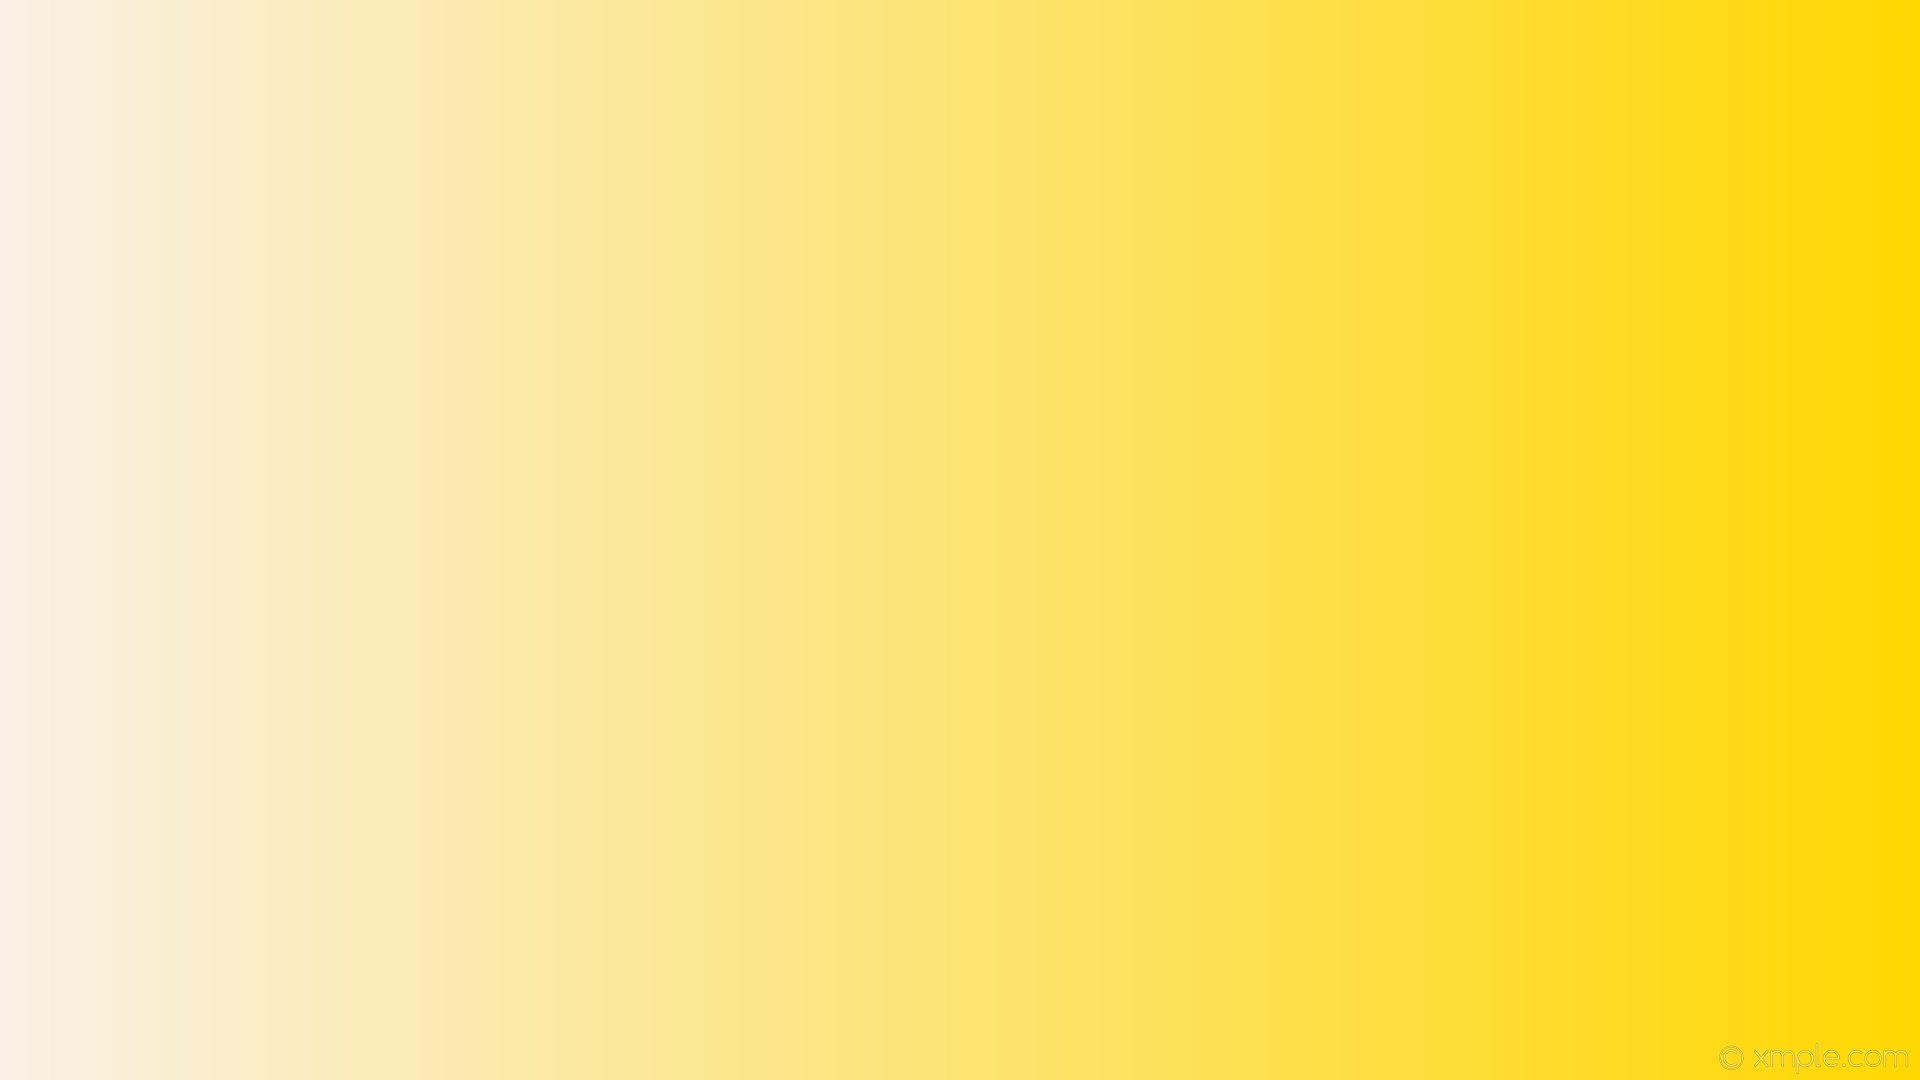 1920x1080 wallpaper linear gradient yellow white gold linen #ffd700 #faf0e6 0Â°